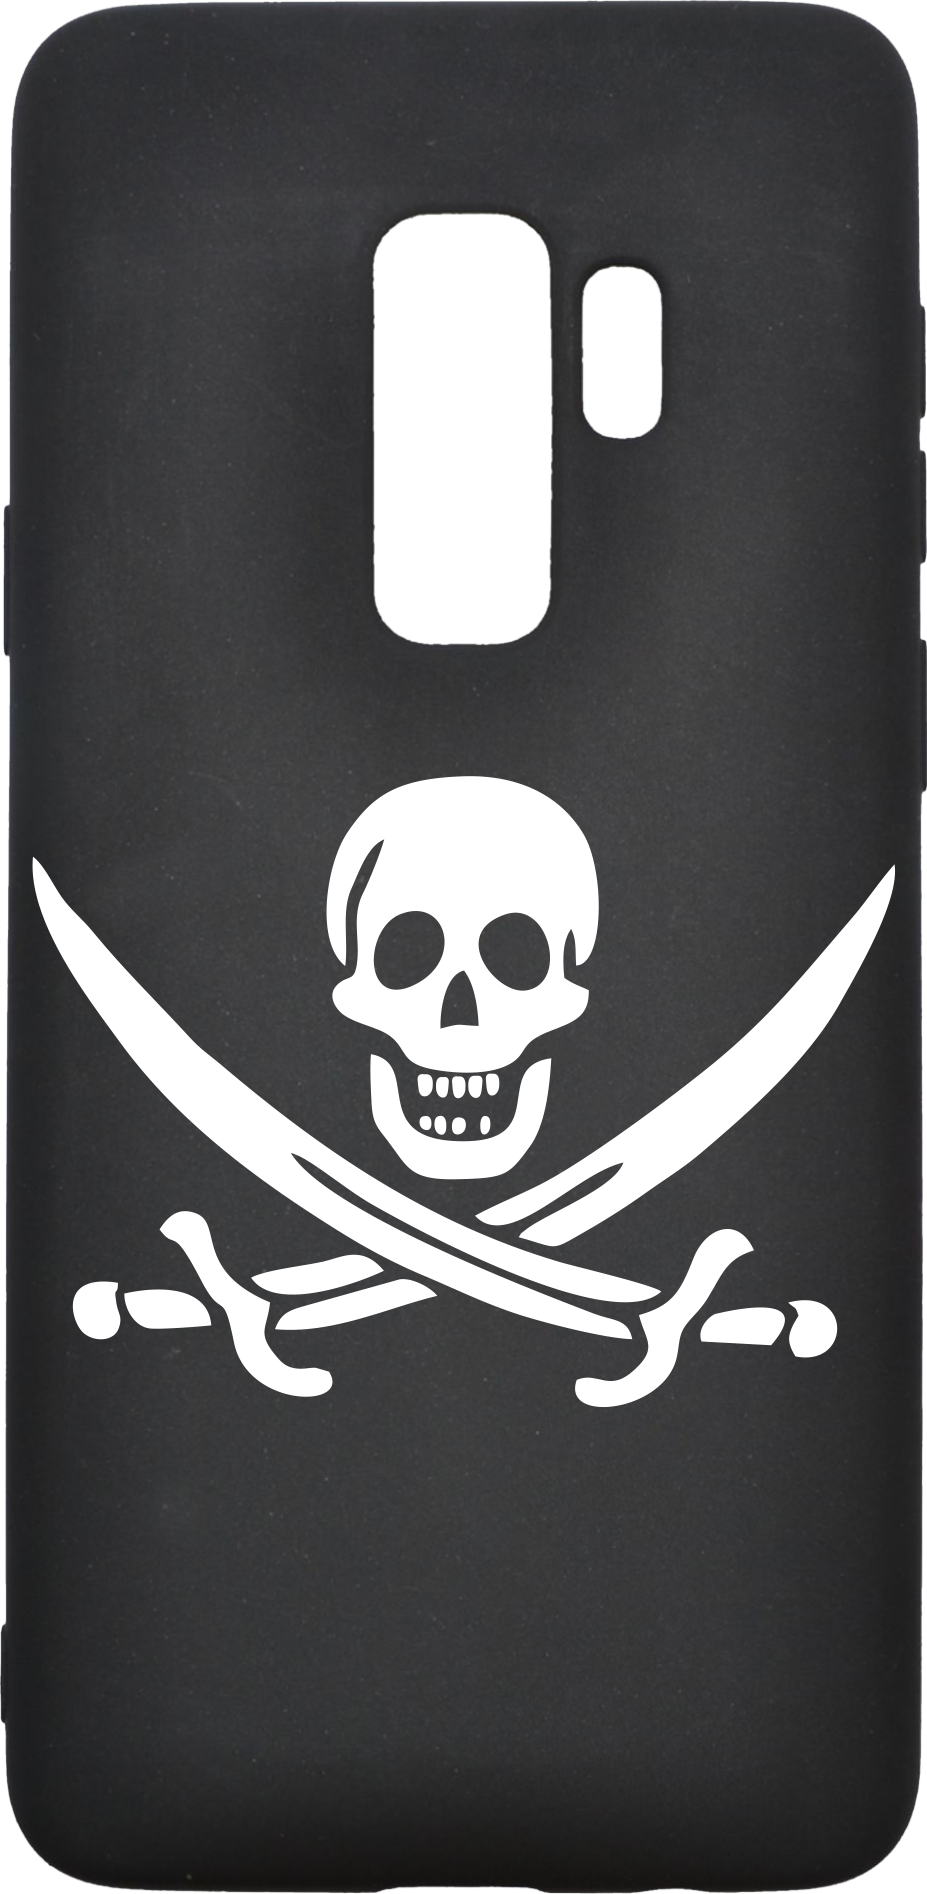 Jolly Roger - Blackbeard Pirate Flag (927x1894), Png Download